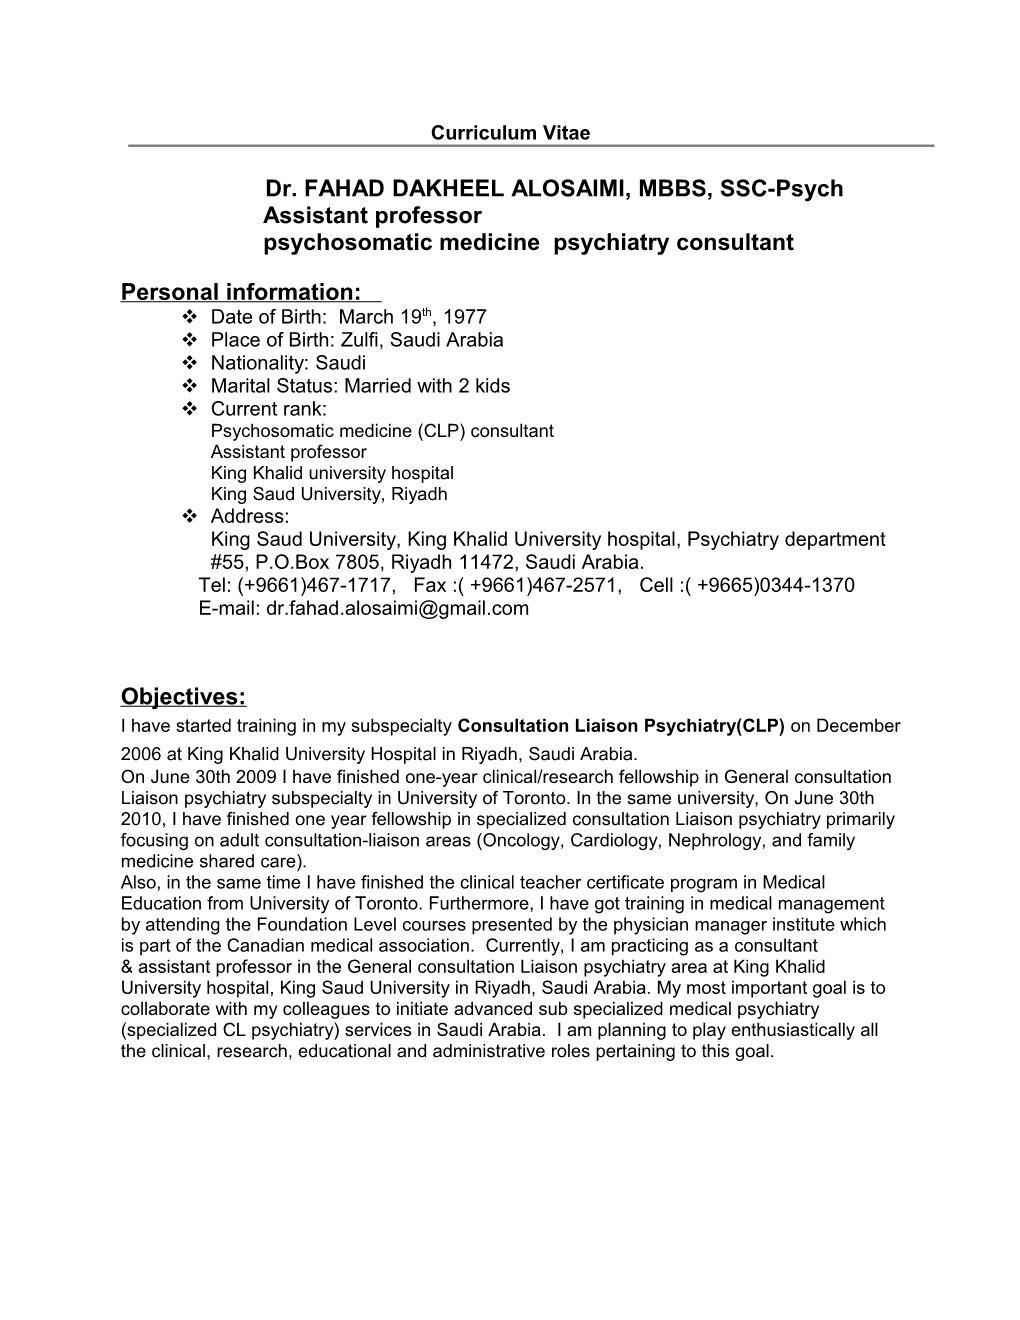 Dr. FAHAD DAKHEEL ALOSAIMI, MBBS, SSC-Psych